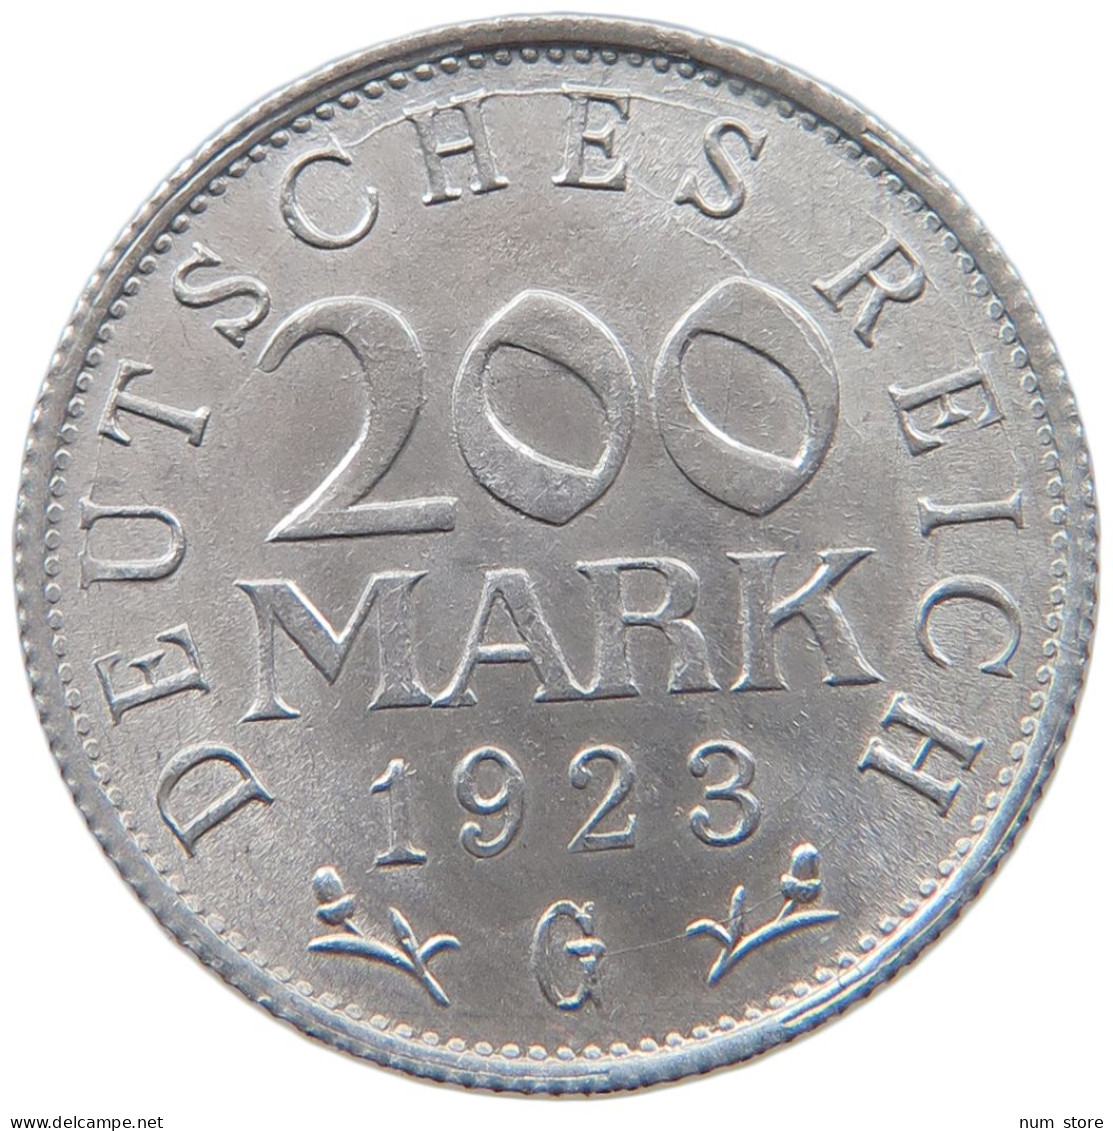 WEIMARER REPUBLIK 200 MARK 1923 G  #MA 098788 - 200 & 500 Mark